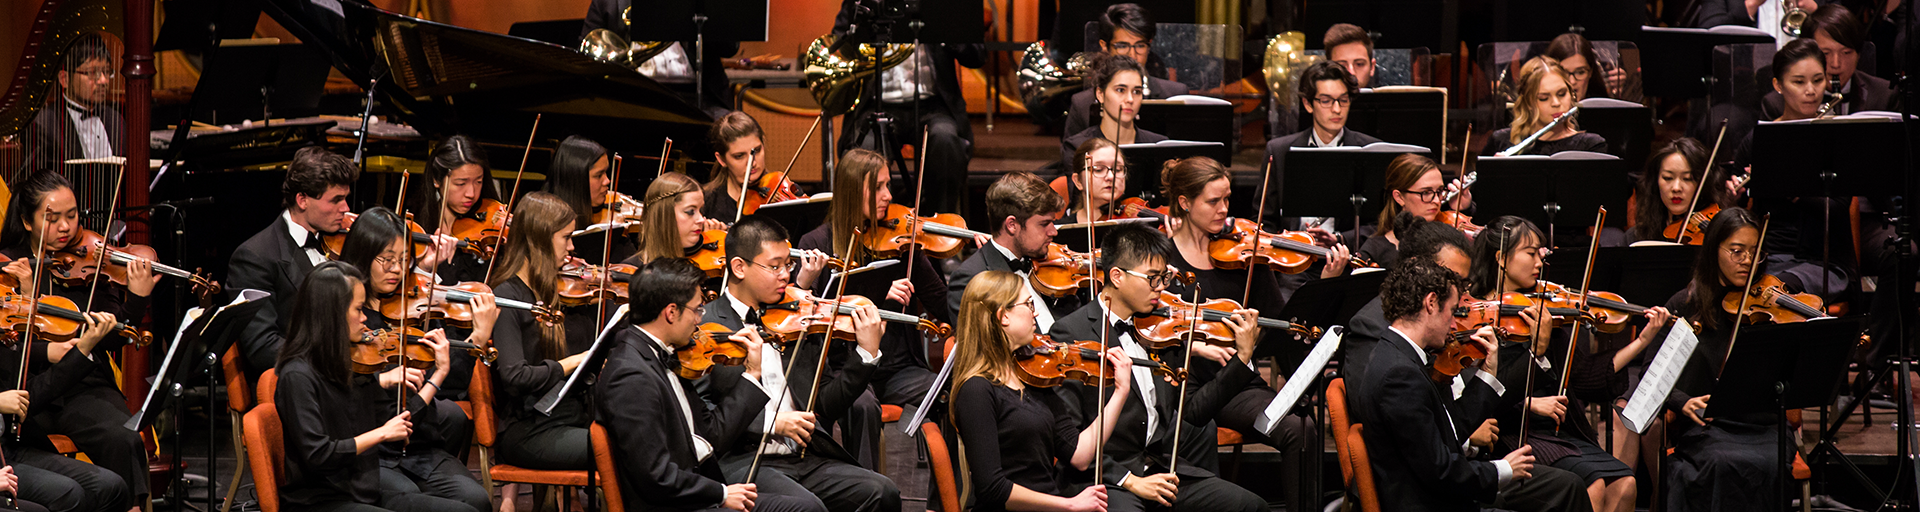 Orchestras: Season | School of Music, Dance and Theatre